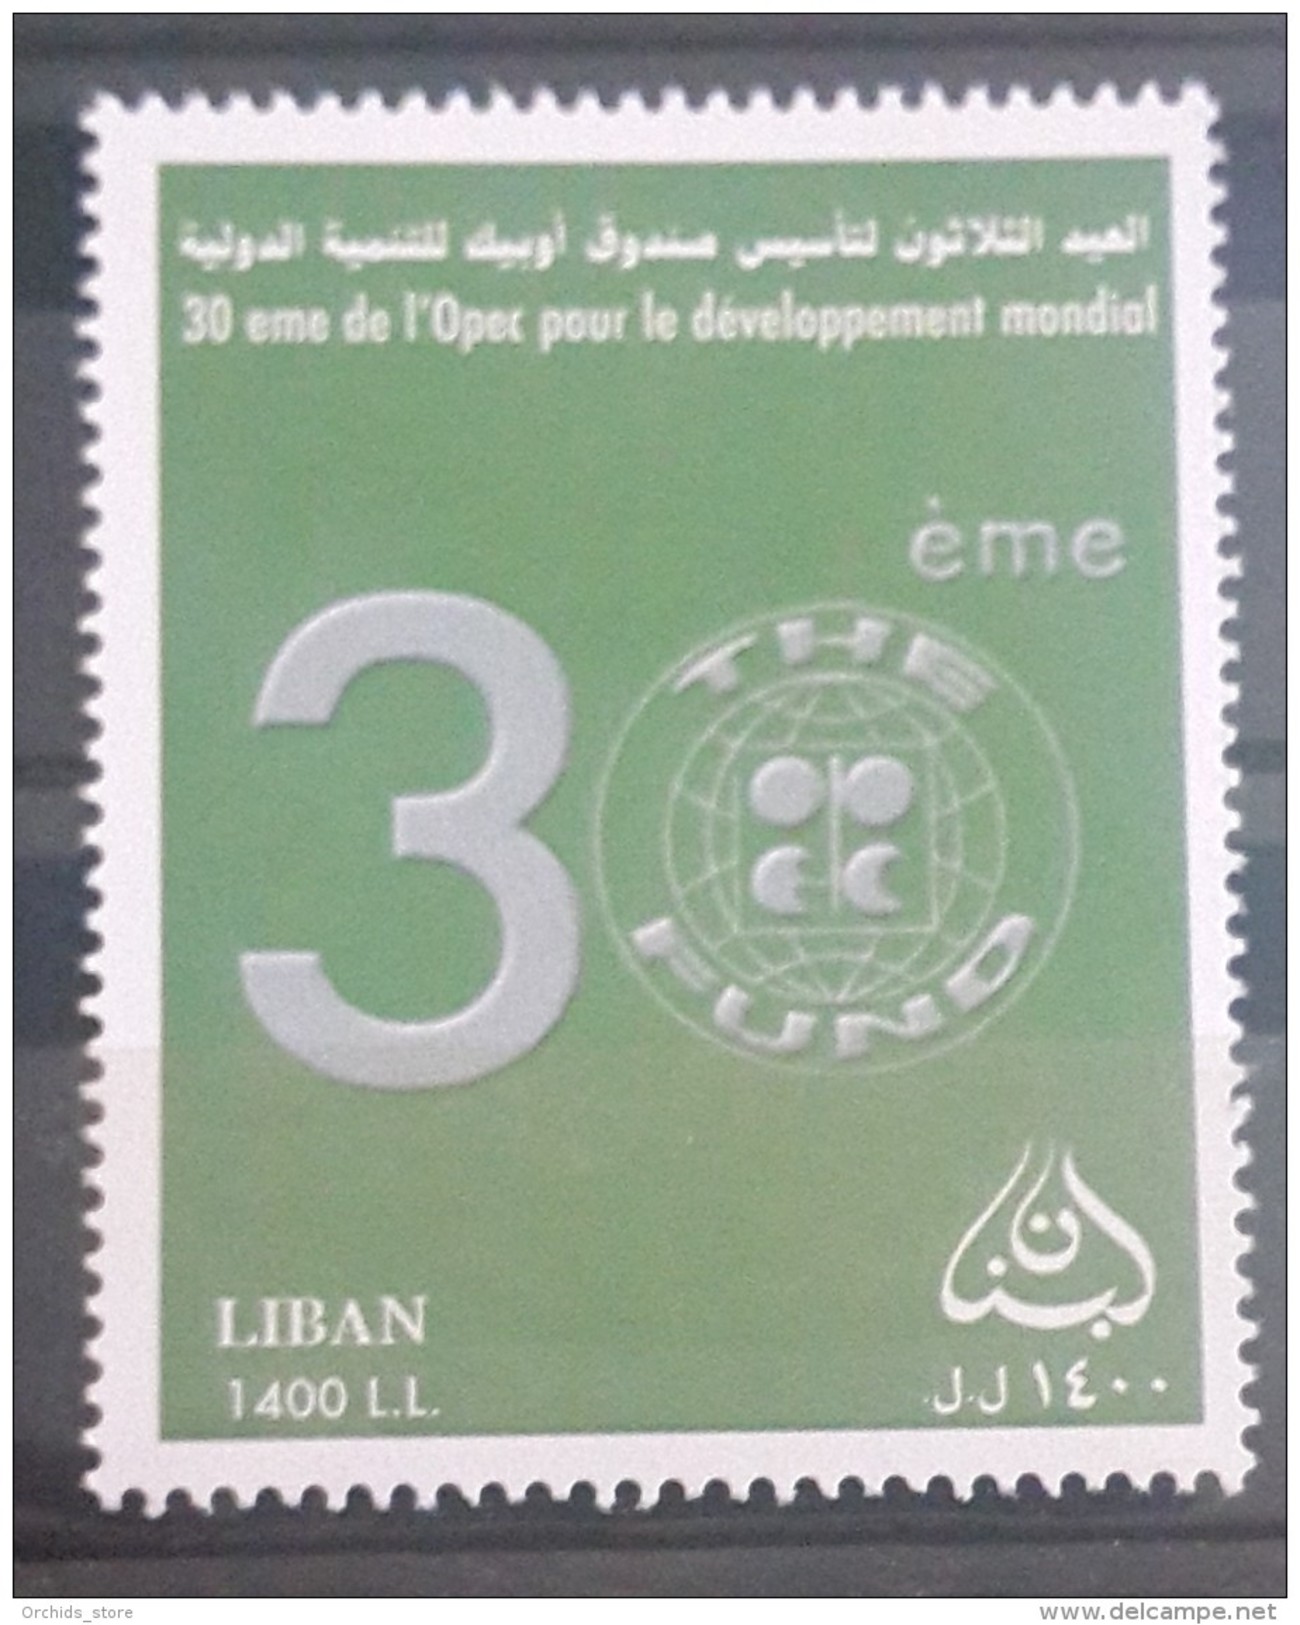 Lebanon 2007 Mi. 1479 MNH Stamp - 30th Anniv Of OPEC - Oil - Petrol - Lebanon